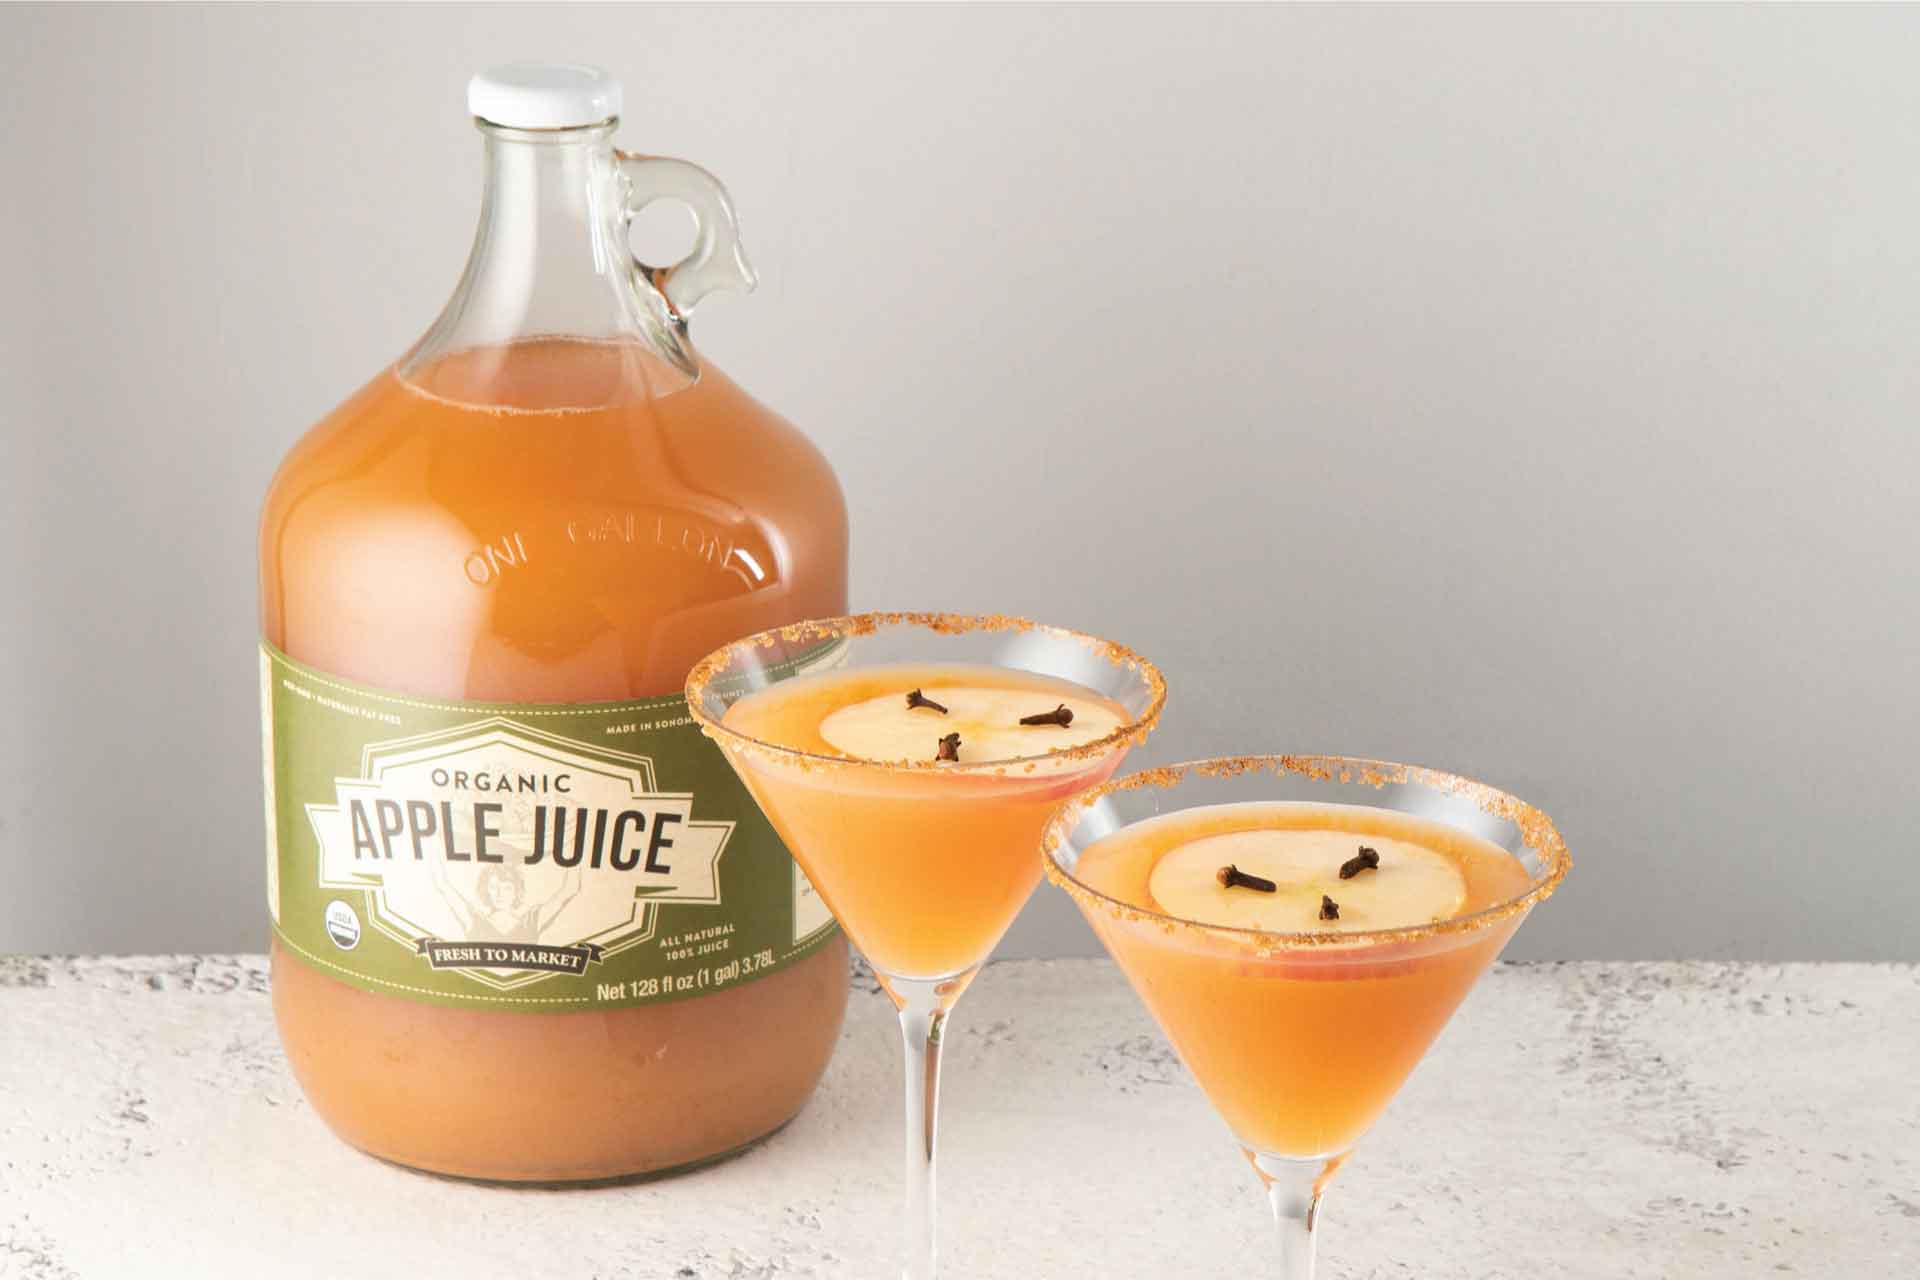 Fresh to Market Apple Juice